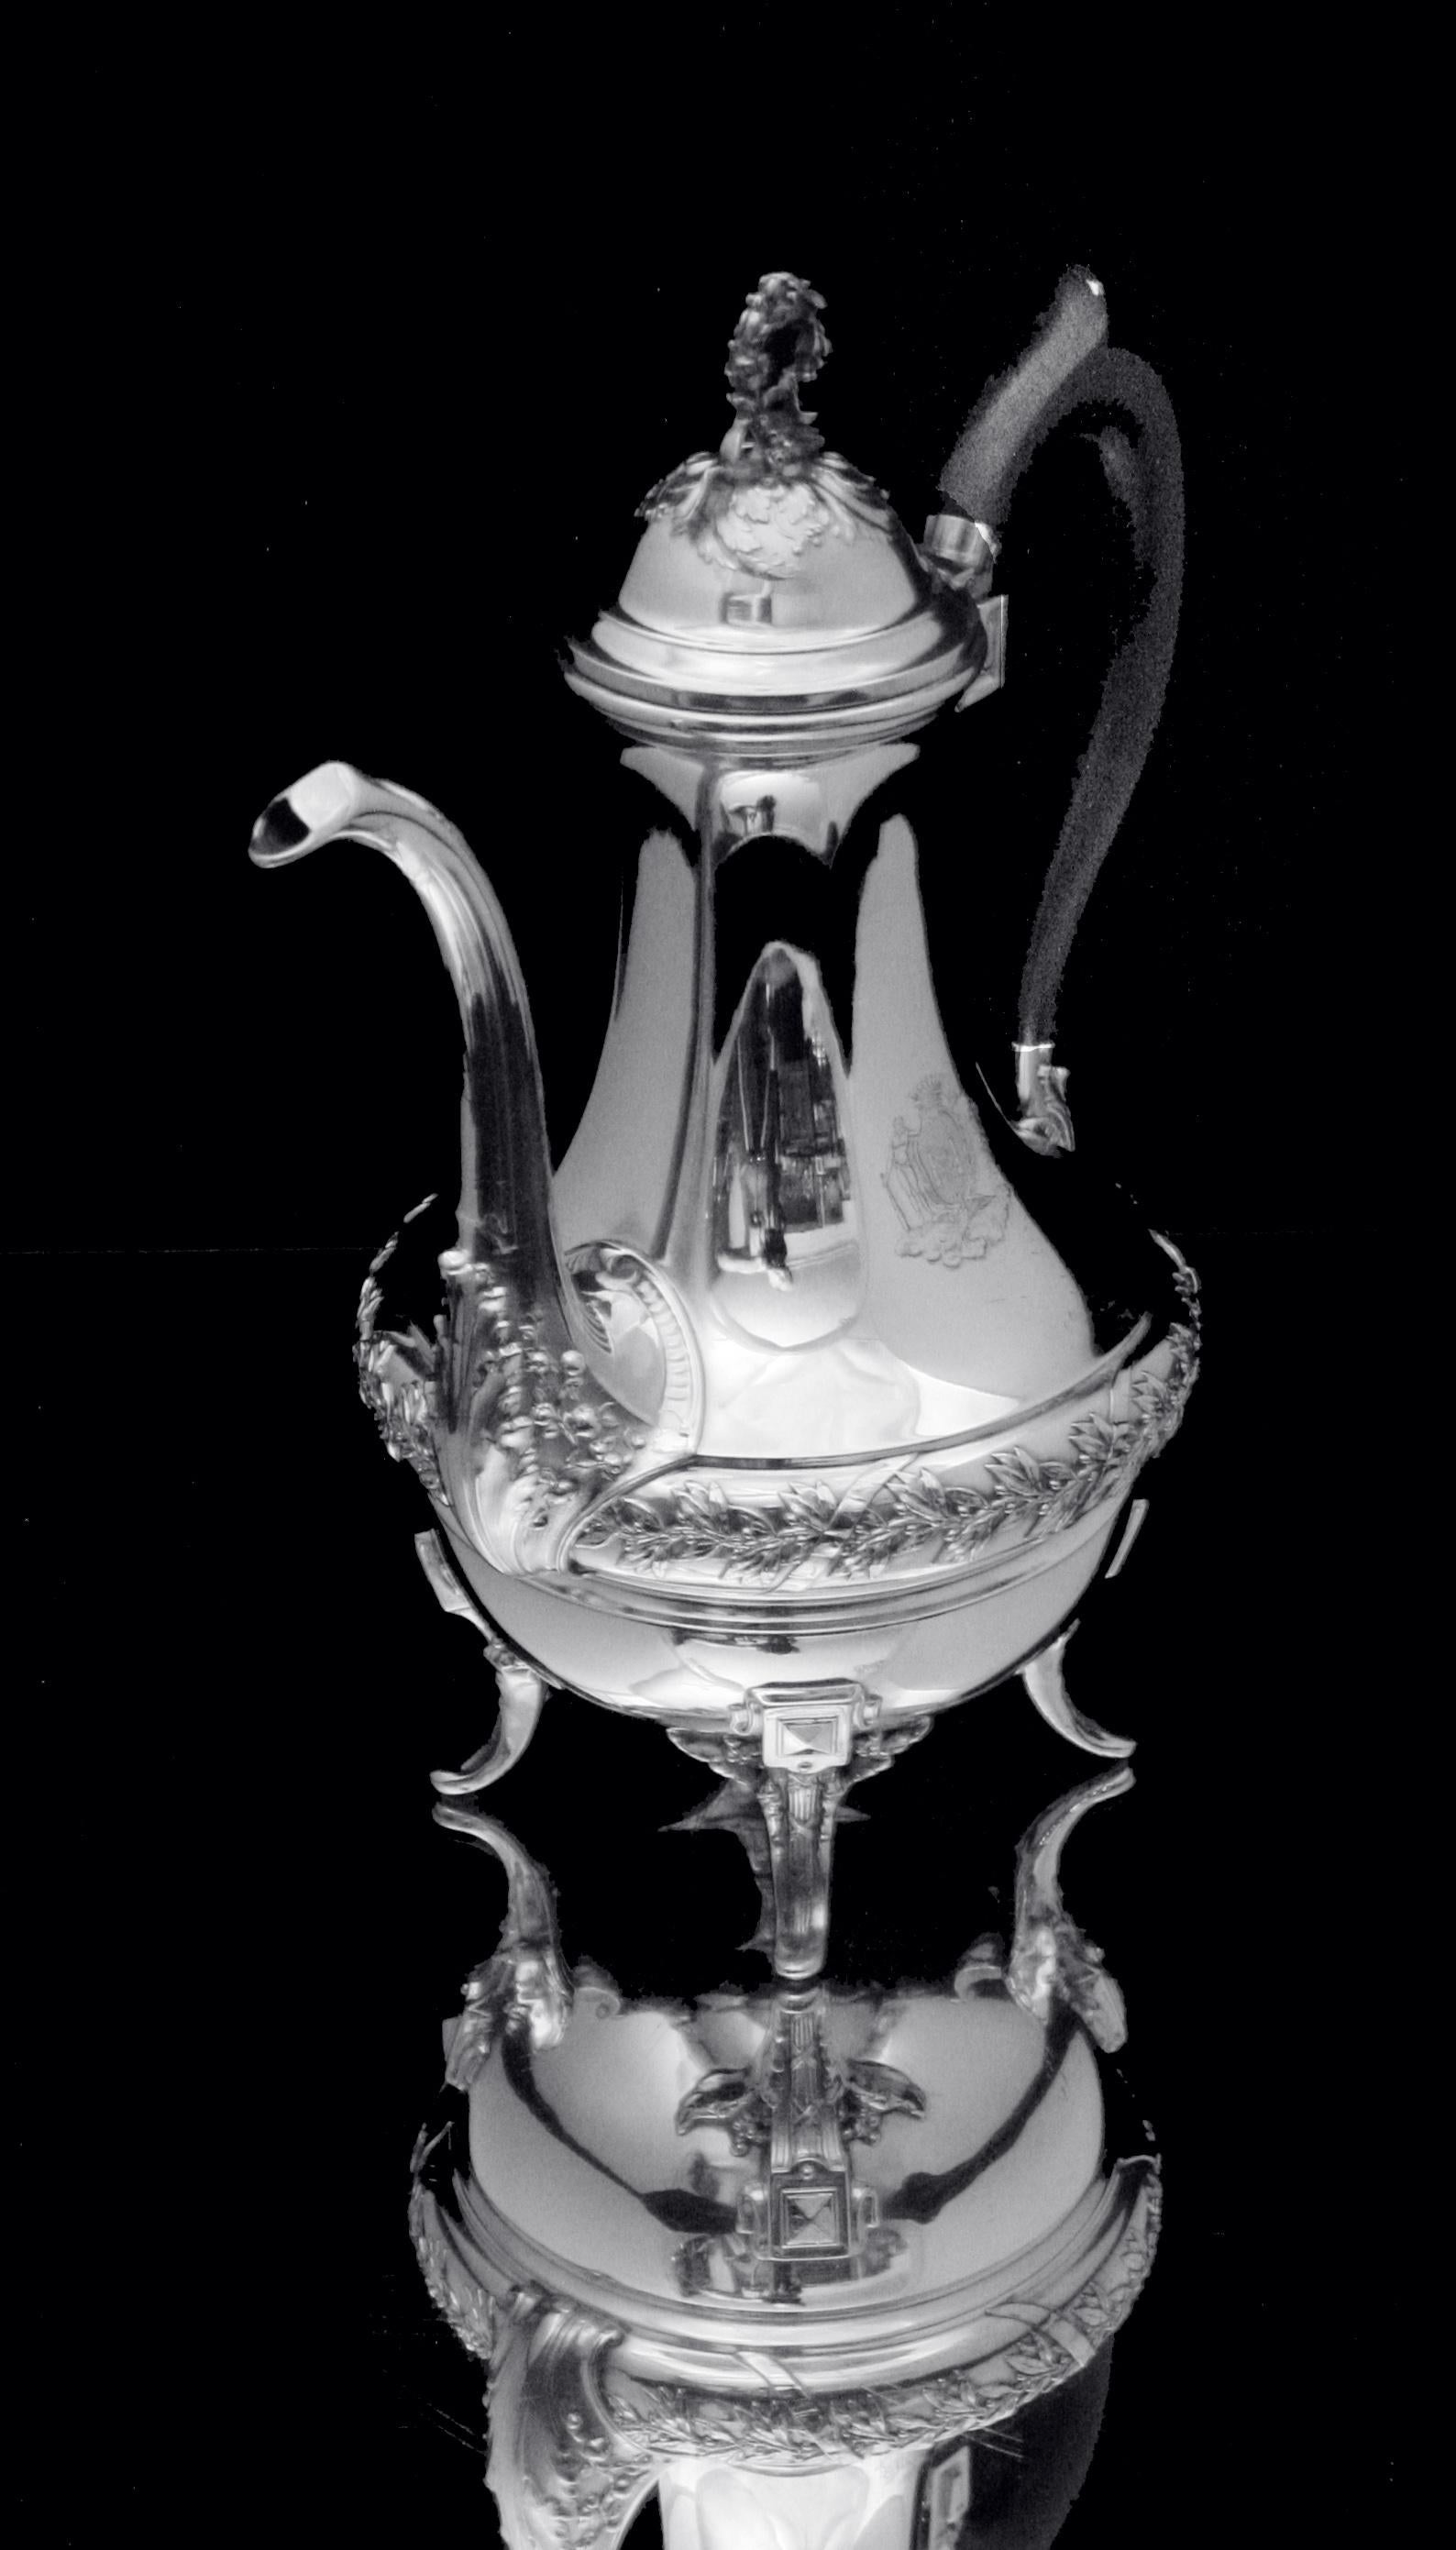 Late 19th Century Boulenger - 8pc. Louis XVI, Silver Tea Set - Museum Quality ! For Sale